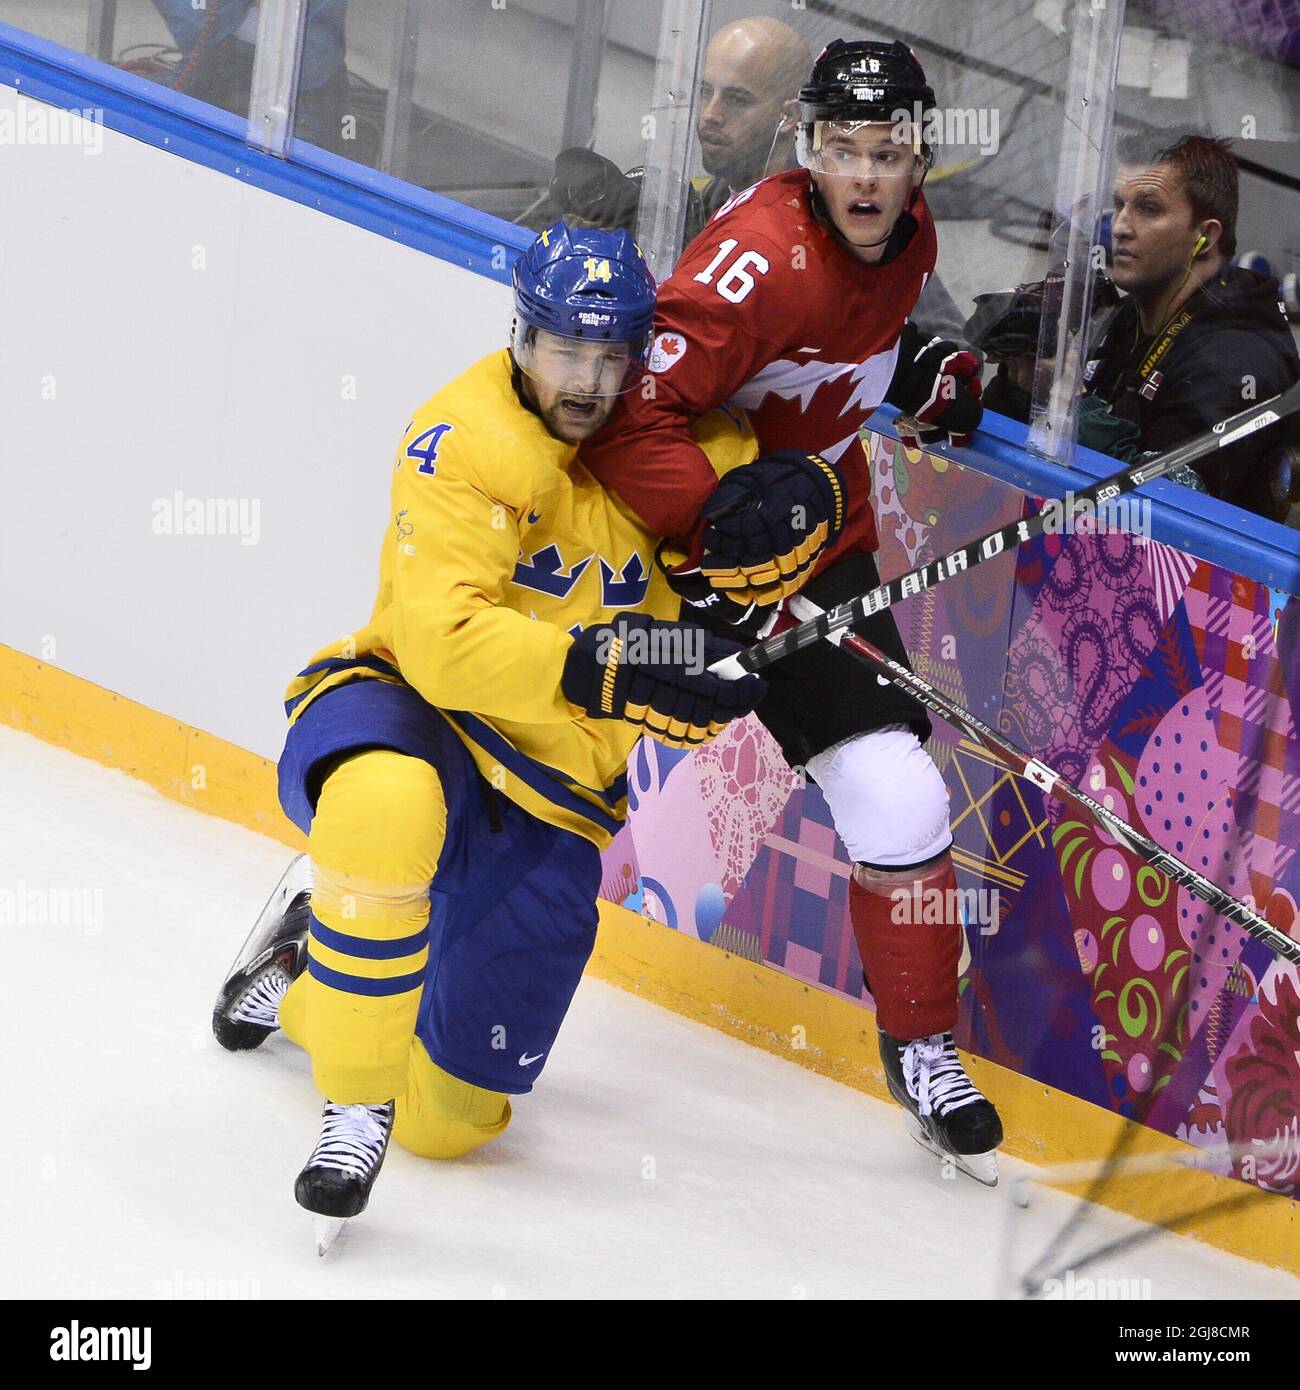 Download Ice Hockey MVP No. 19 Jonathan Toews Wallpaper